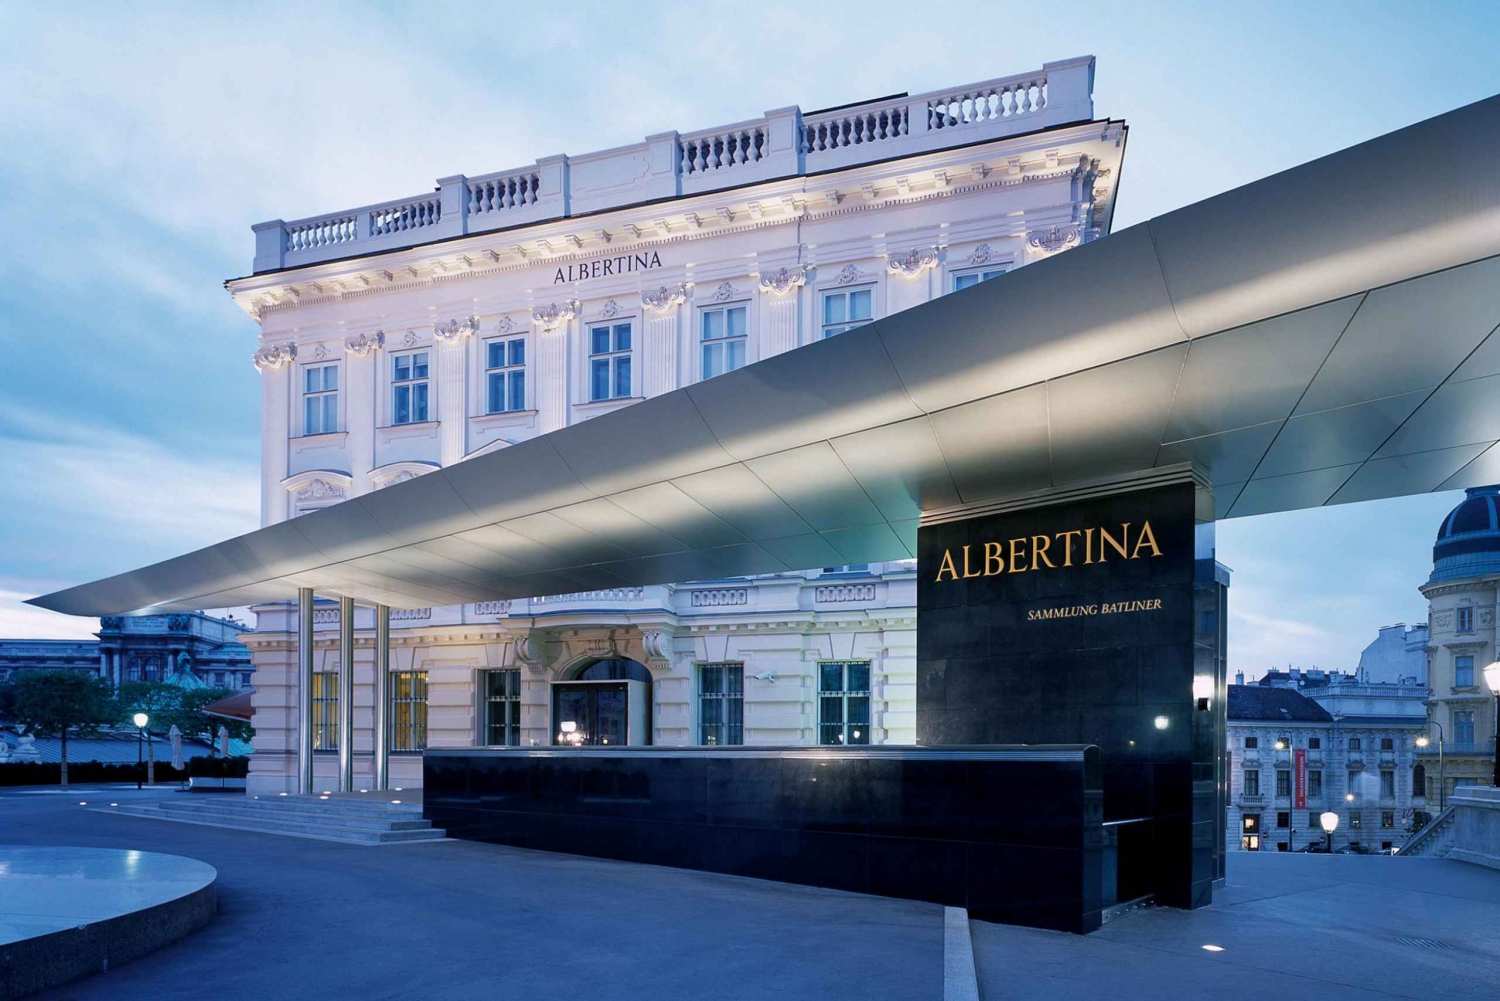 Viena: Ingresso para as Exposições do Albertina